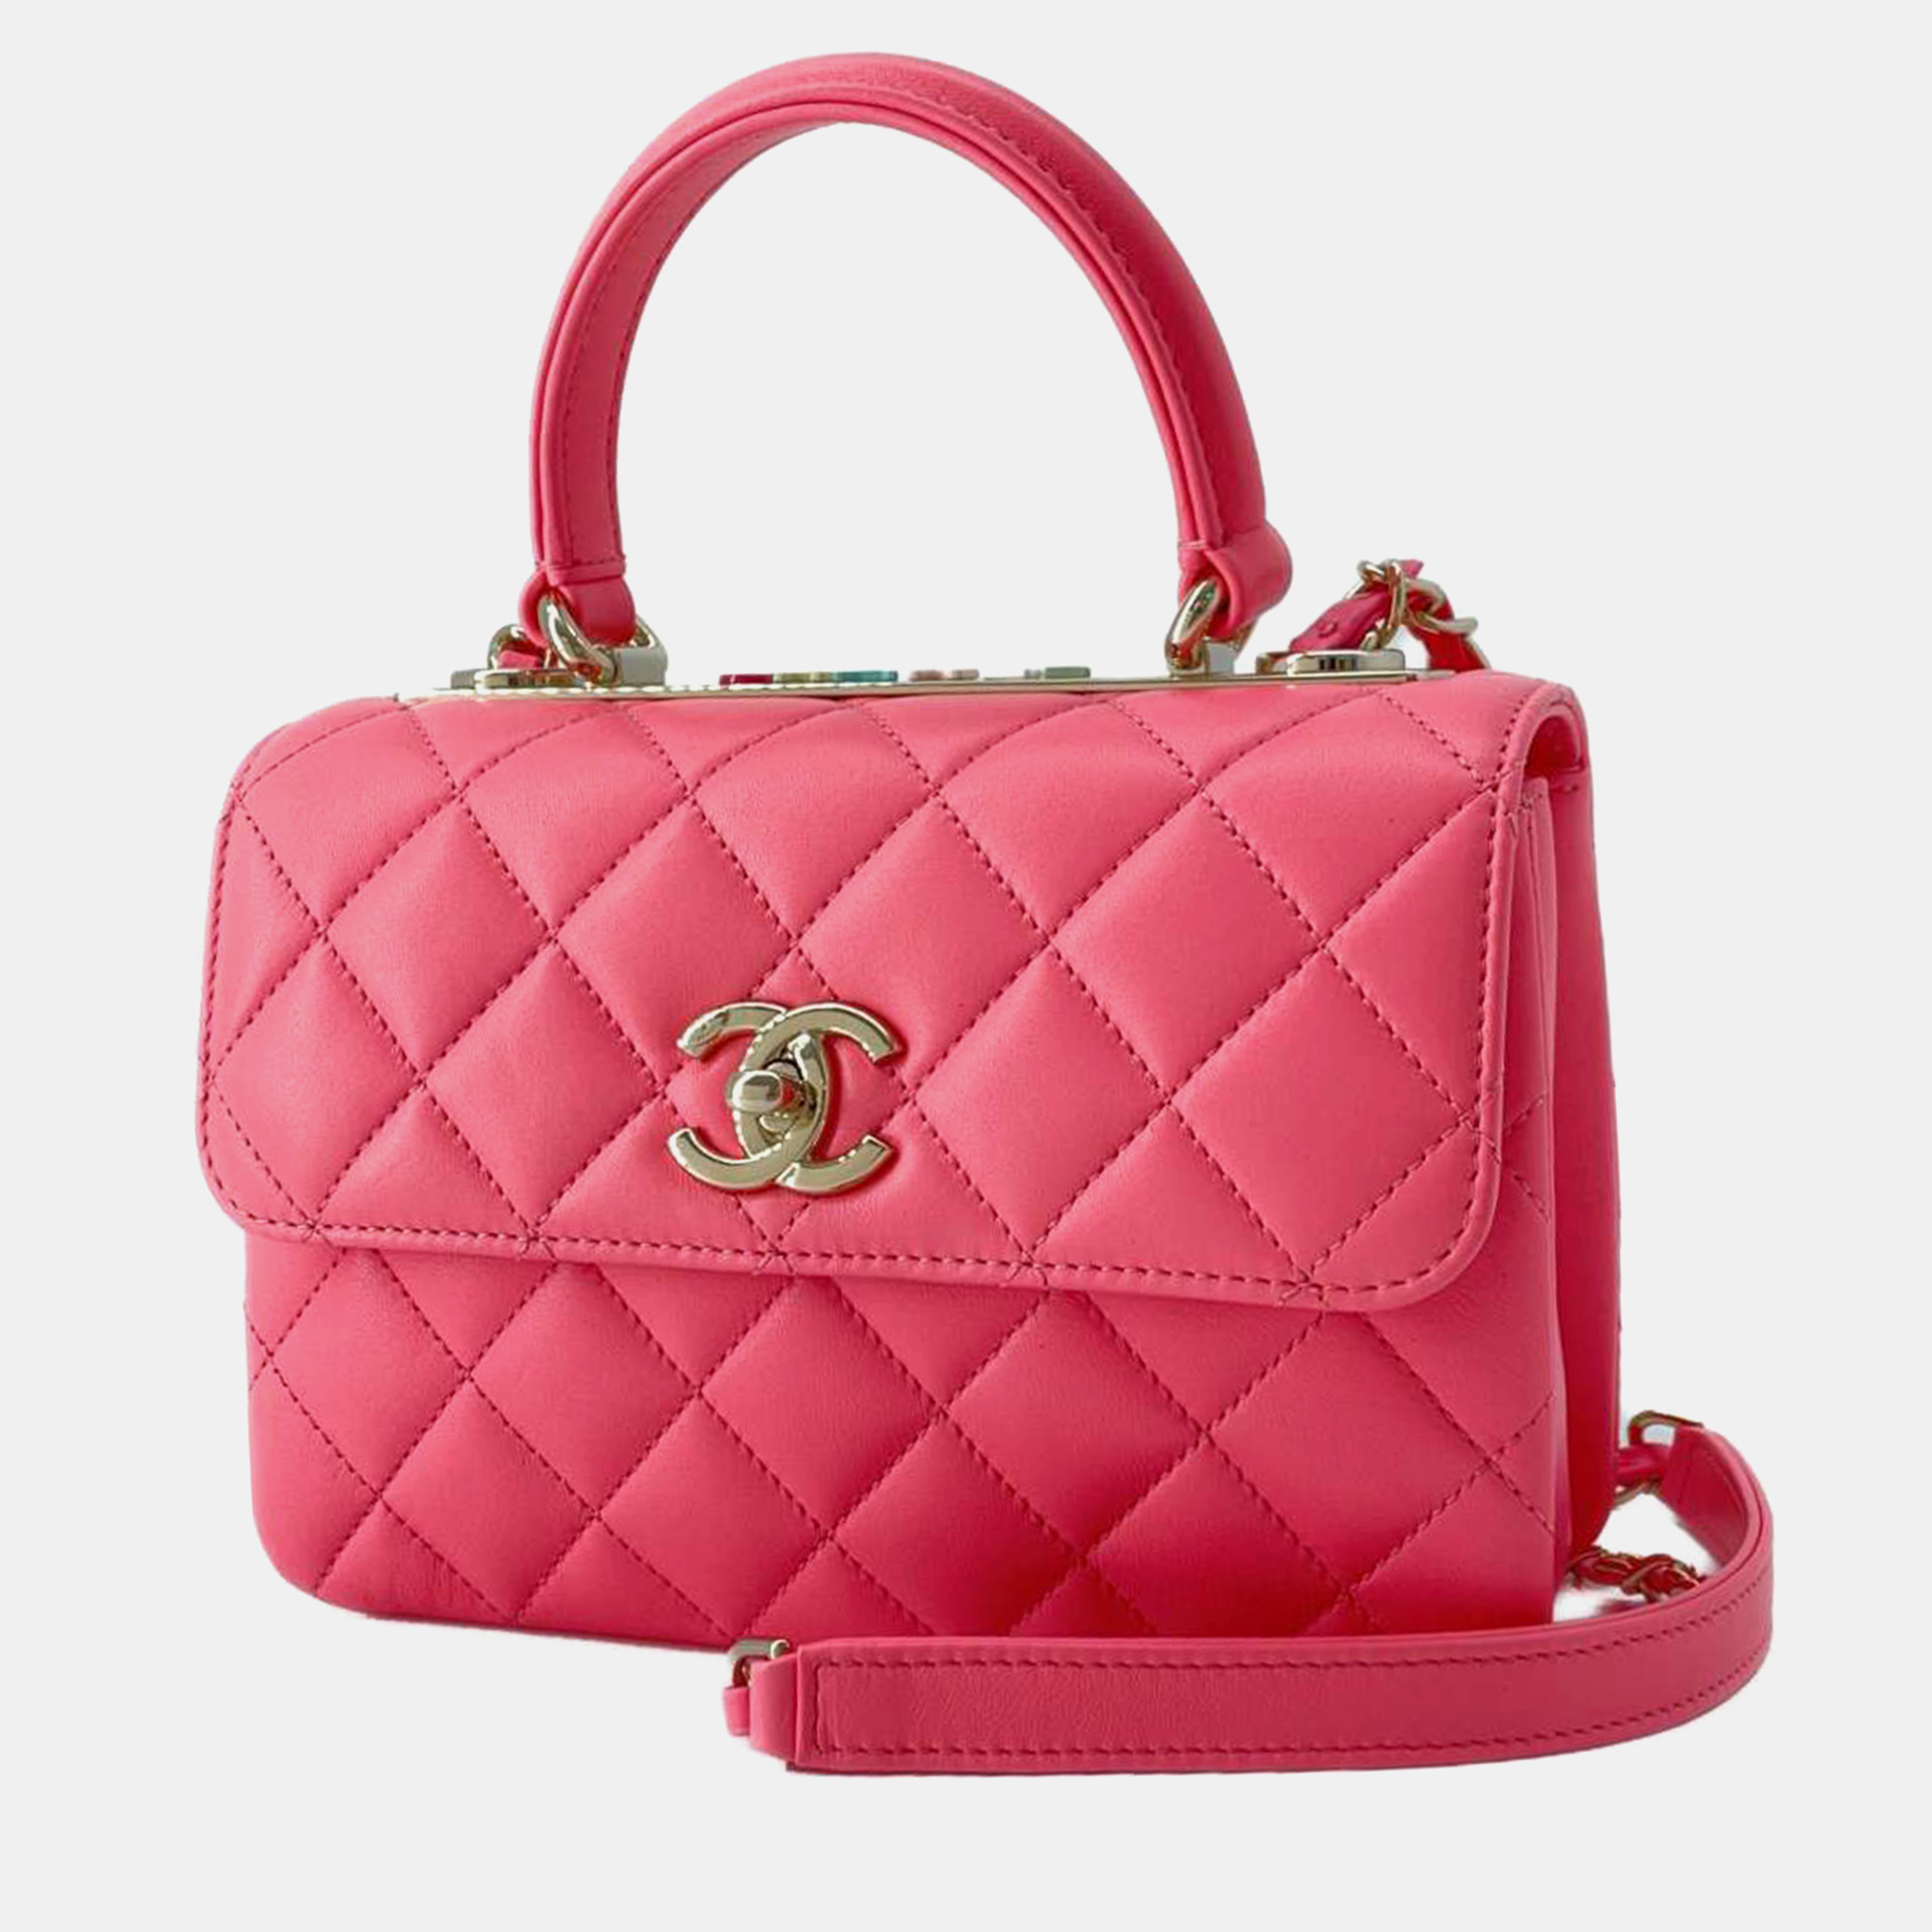 Chanel lambskin leather medium trendy cc flap bag